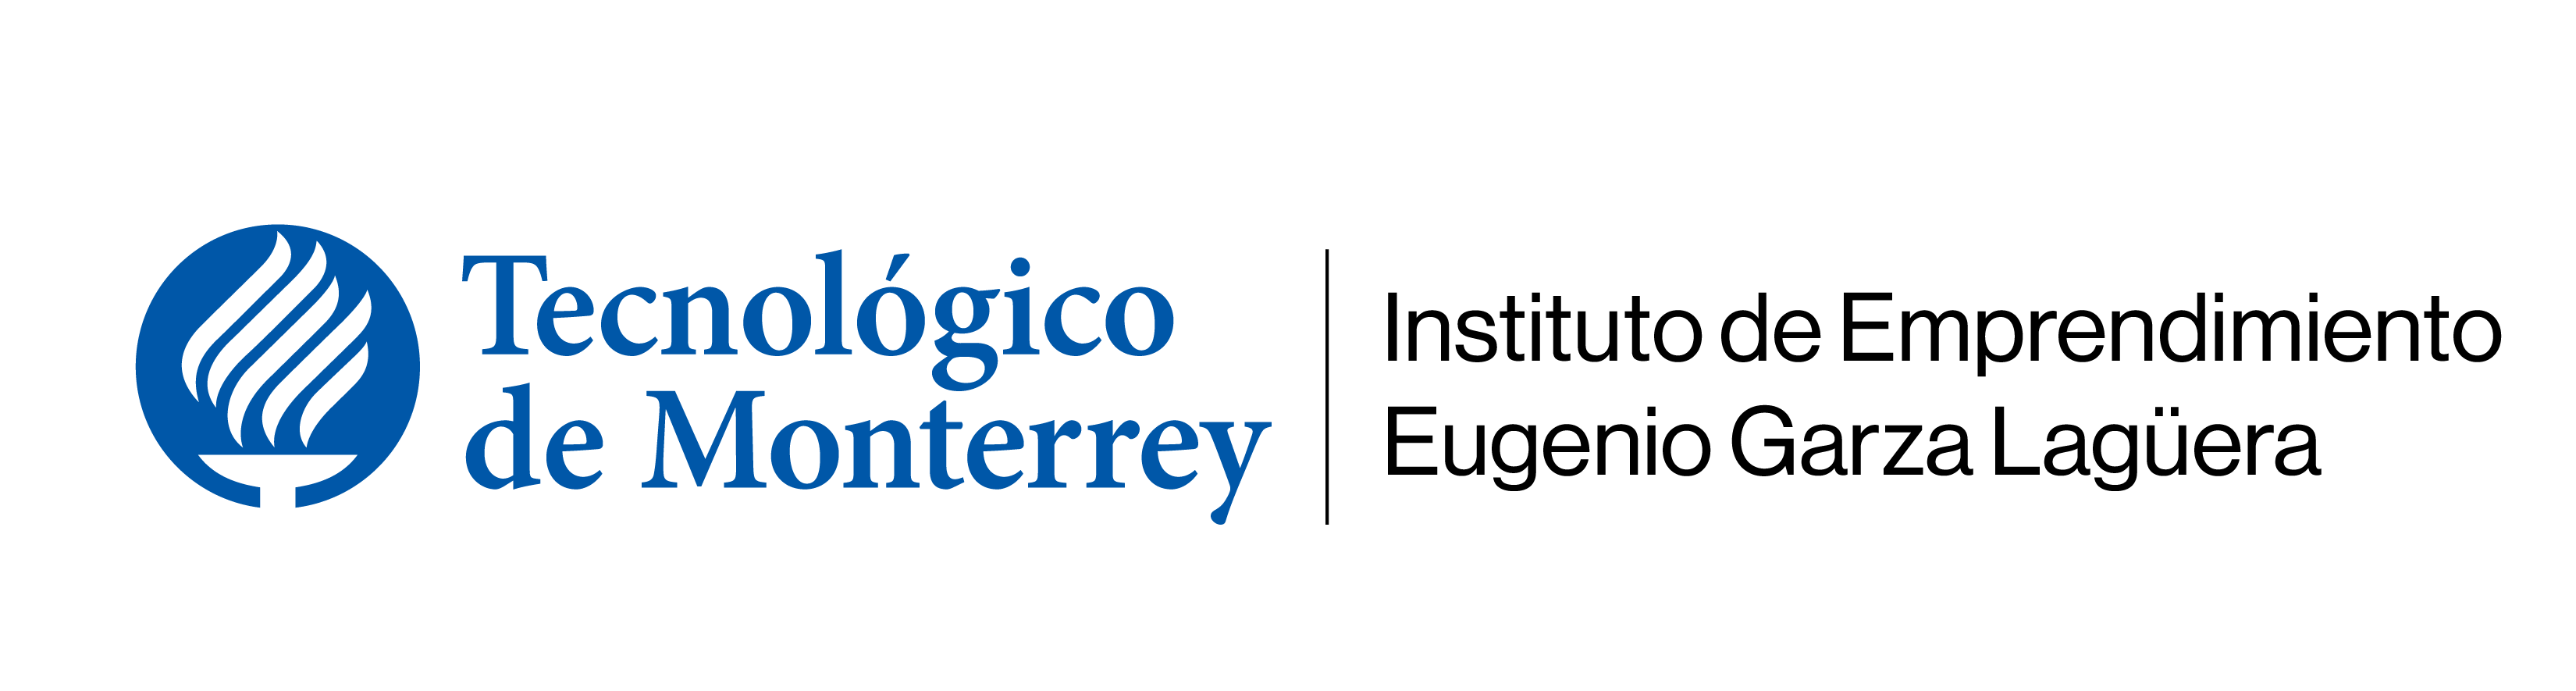 Instituto de Emprendimiento Eugenio Garza Lagûera